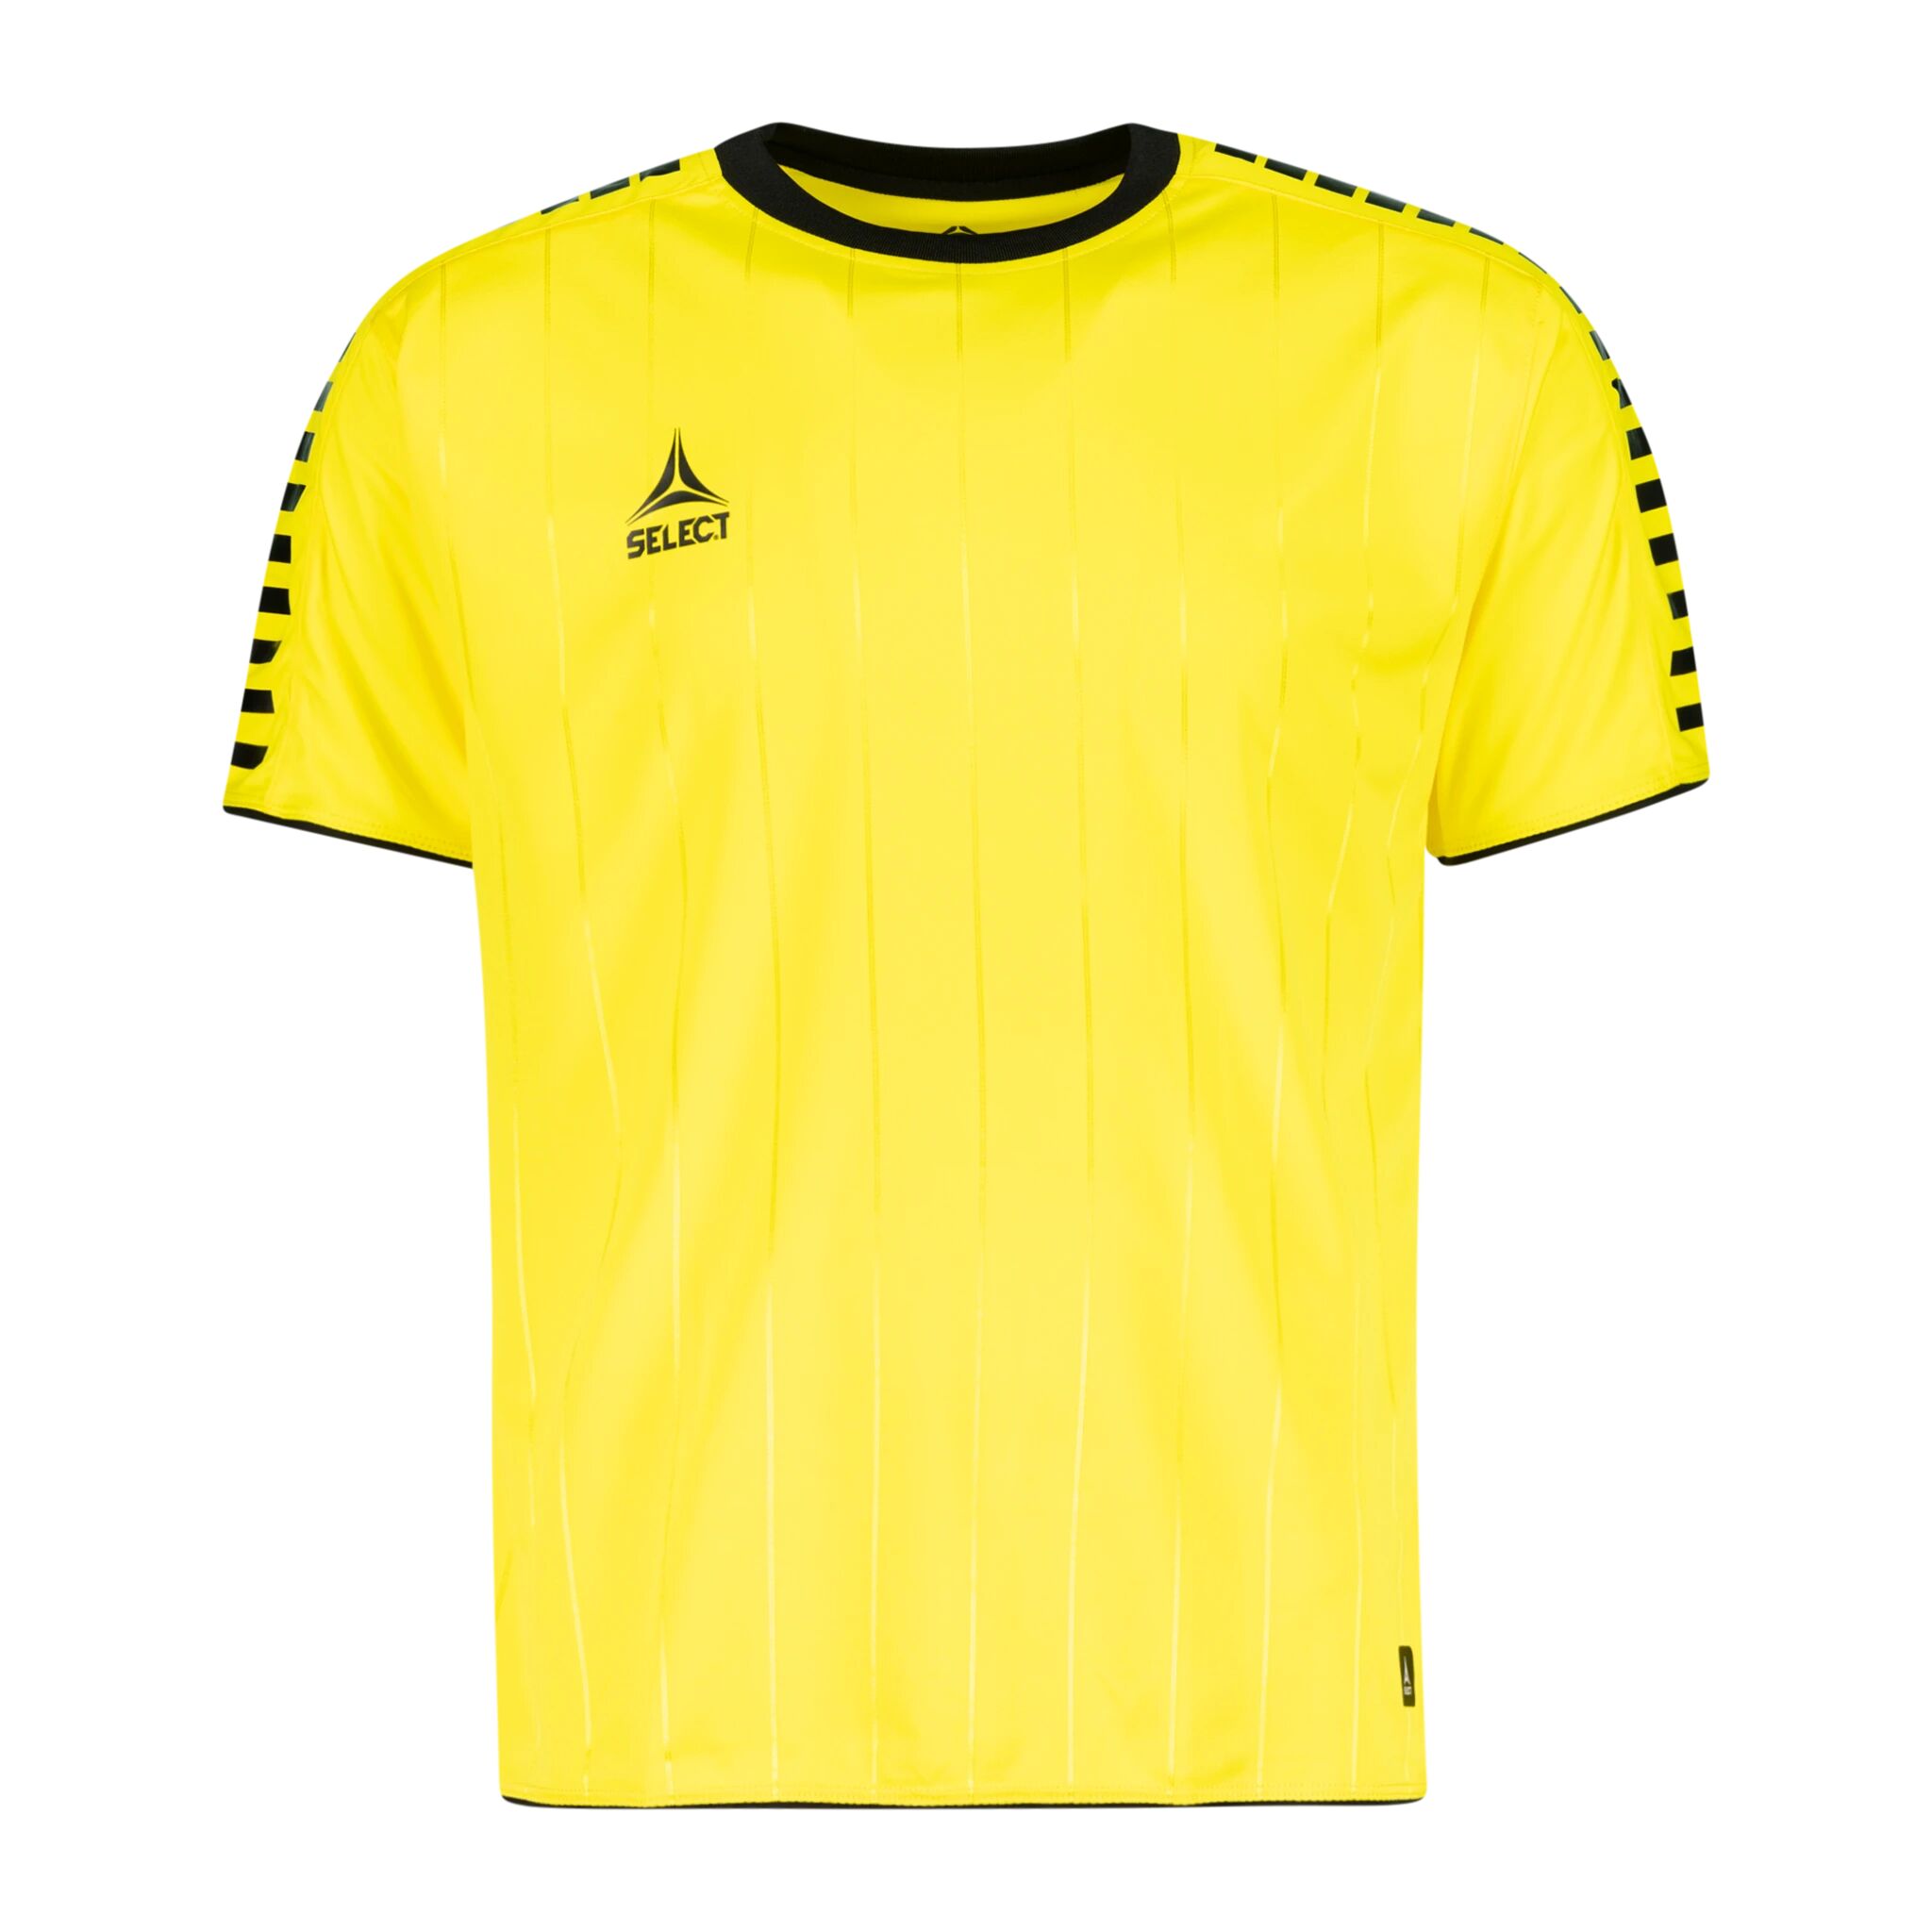 Select Player shirt S/S Argentina, fotballtrøye senior S Yellow/Black